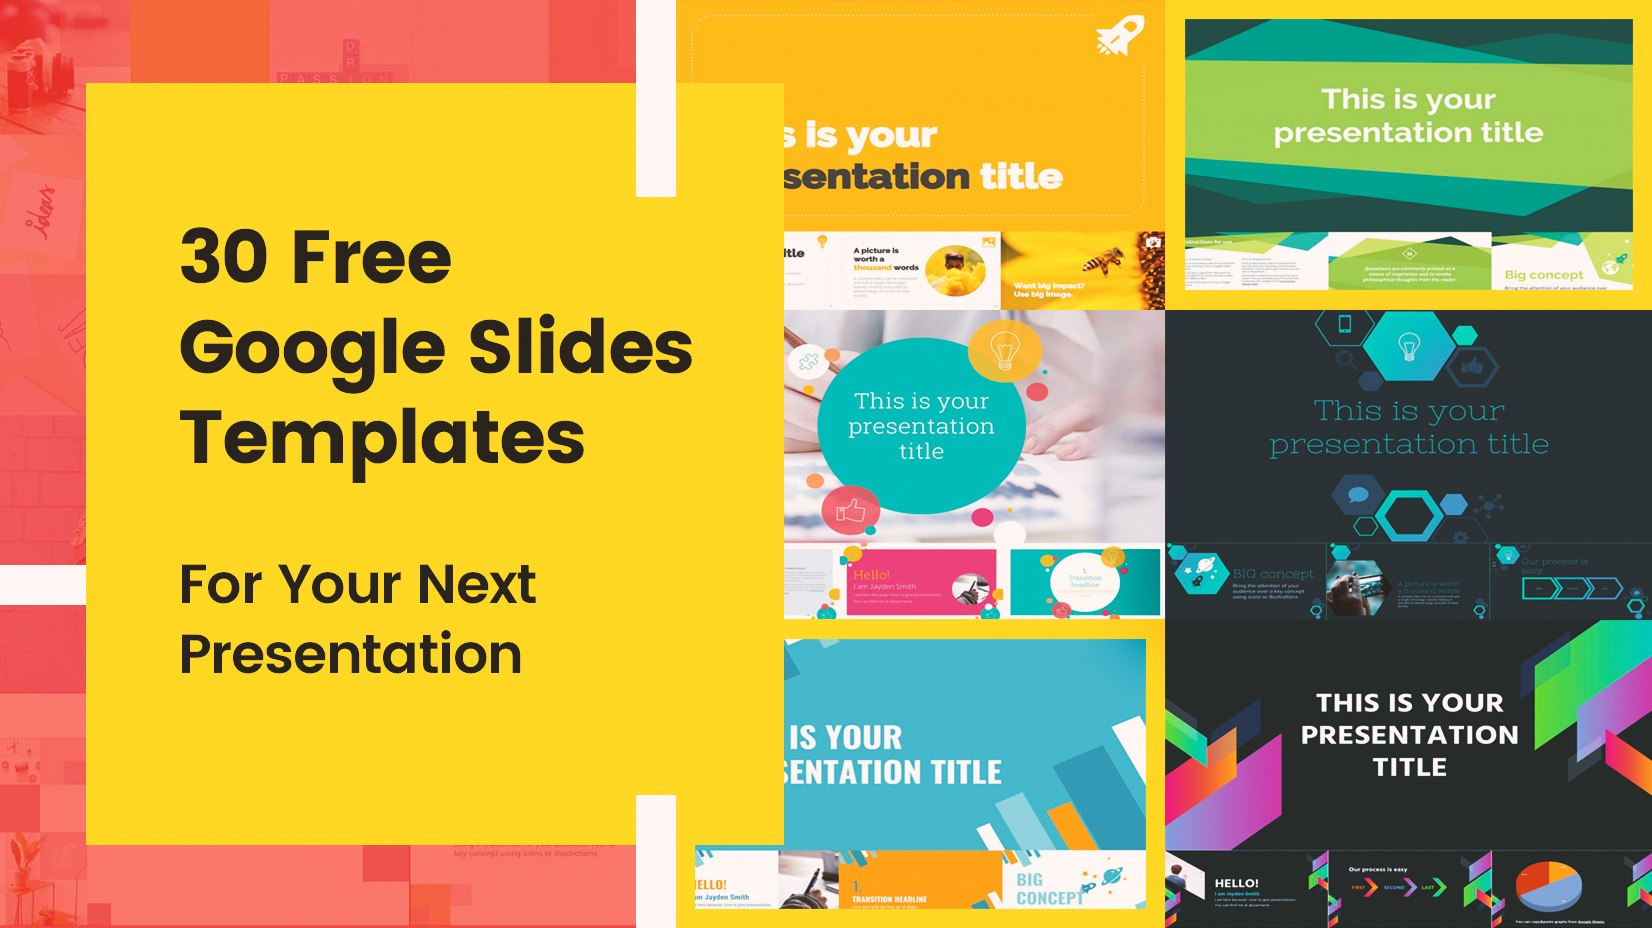 Free Google Slides Templates For Your Next Presentation regarding Google Drive Presentation Templates